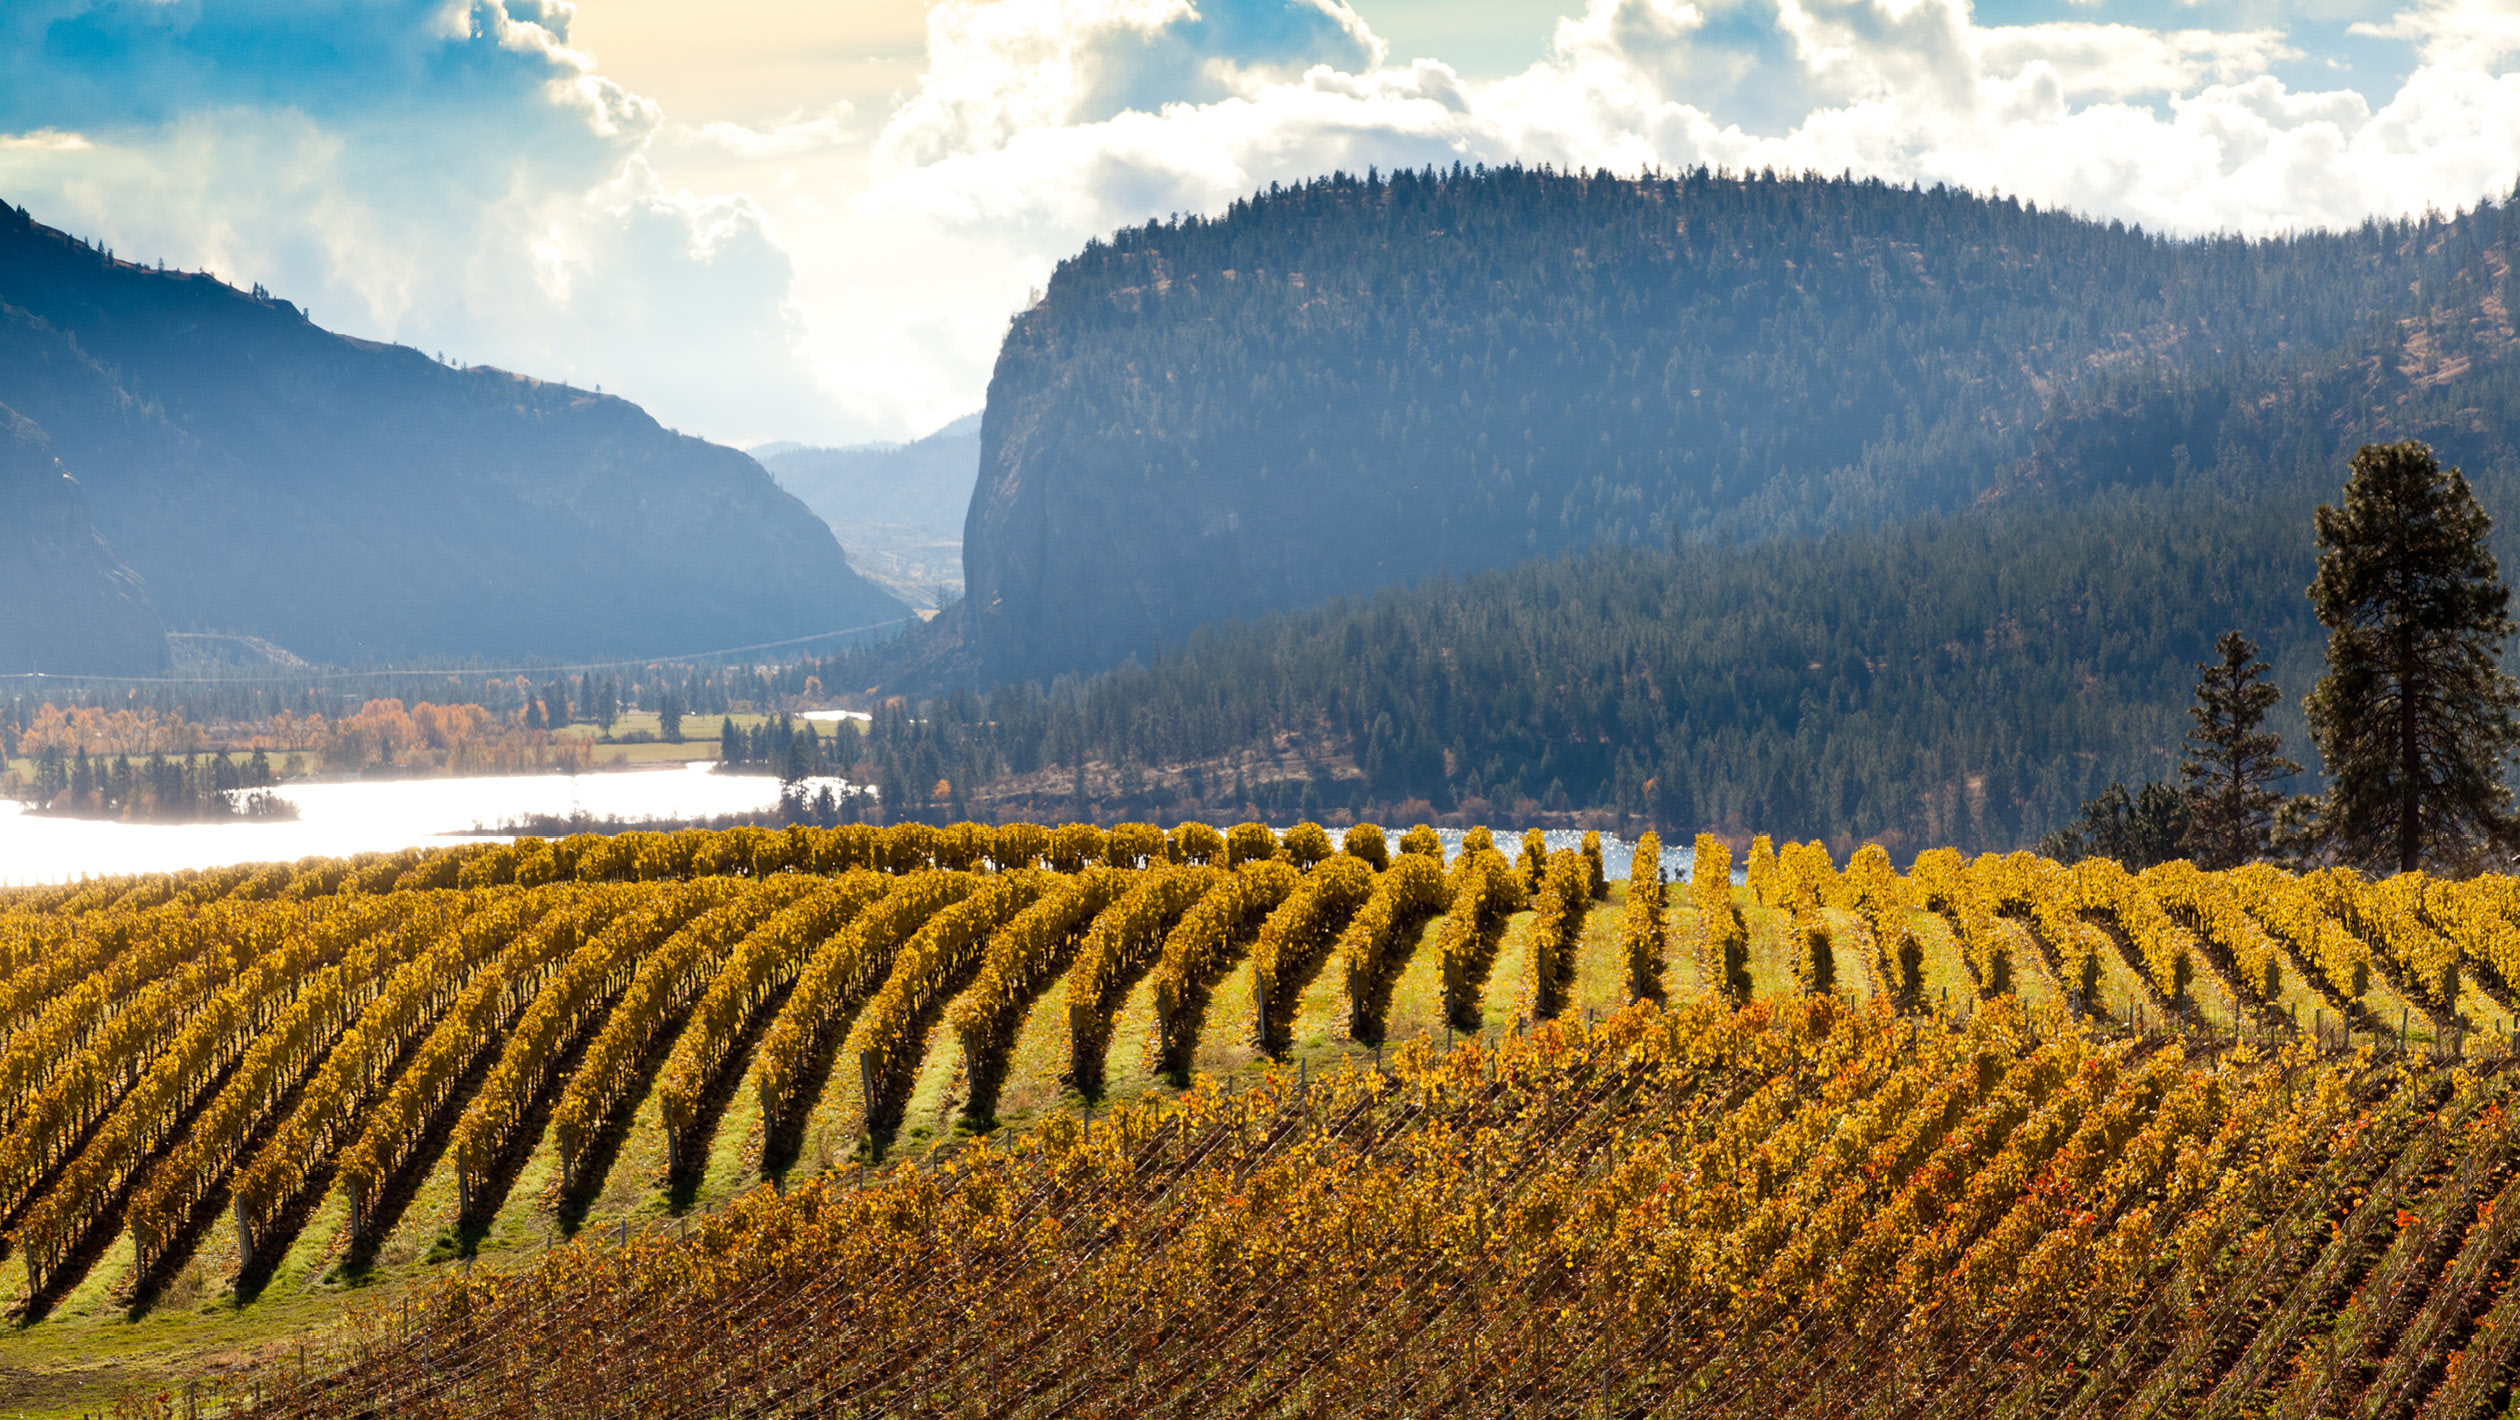 For wine, consider the Okanagan instead of Napa Valley - The Washington Post